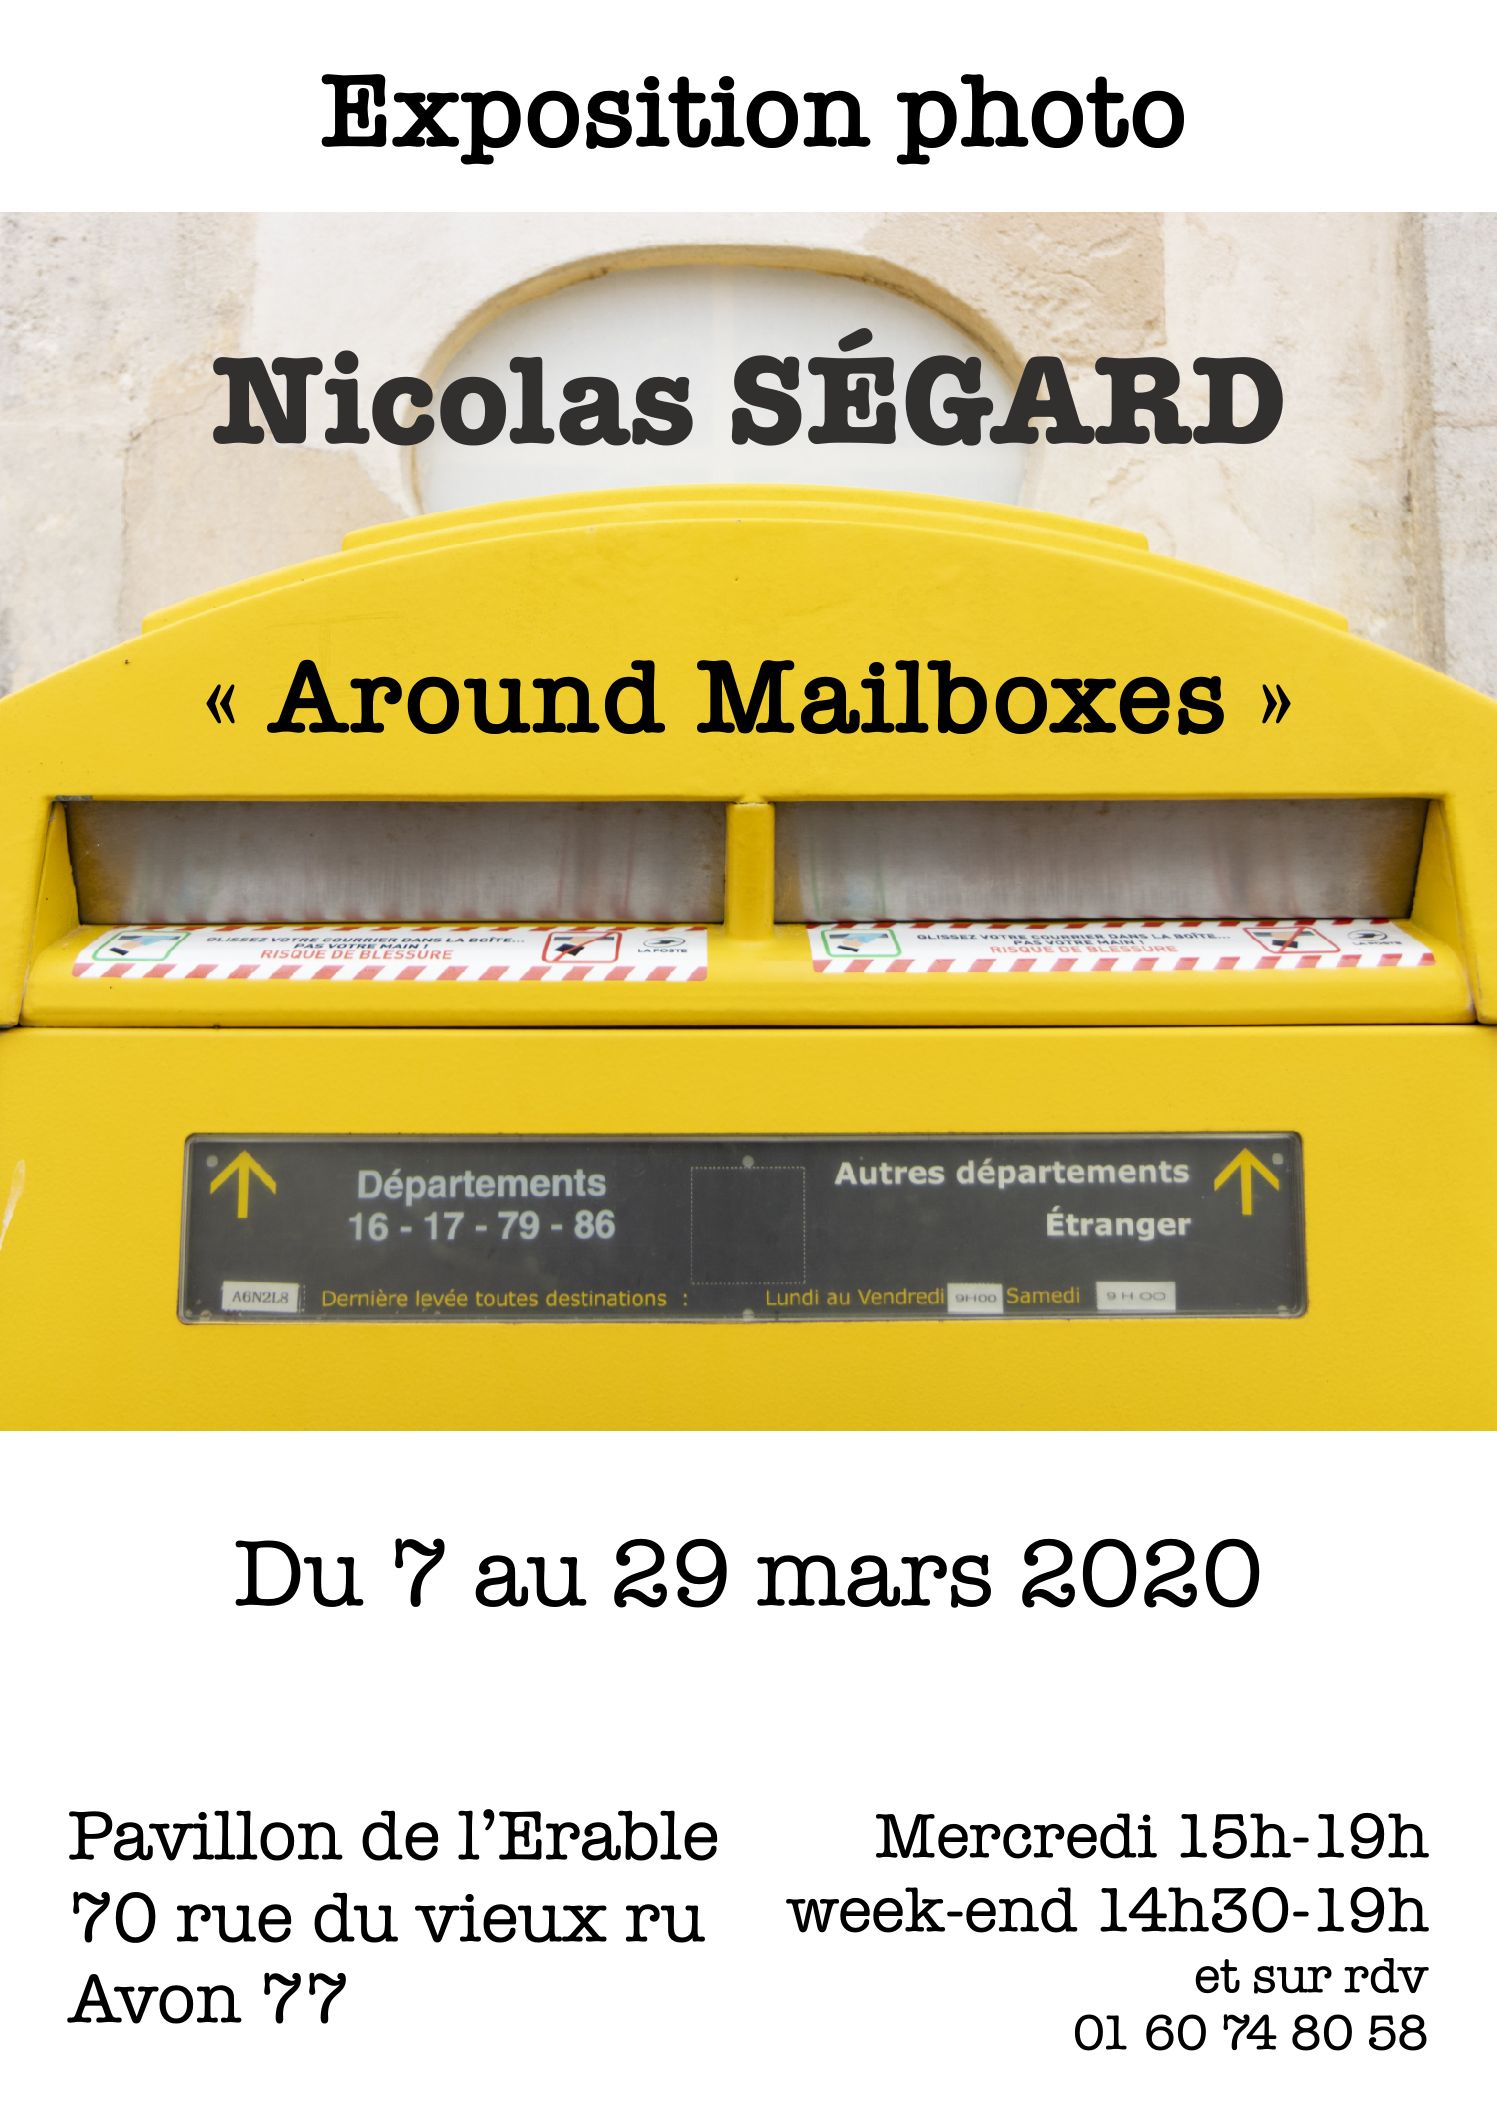 Affiche exposition photo around mailboxes Nicolas Ségard mars 2020